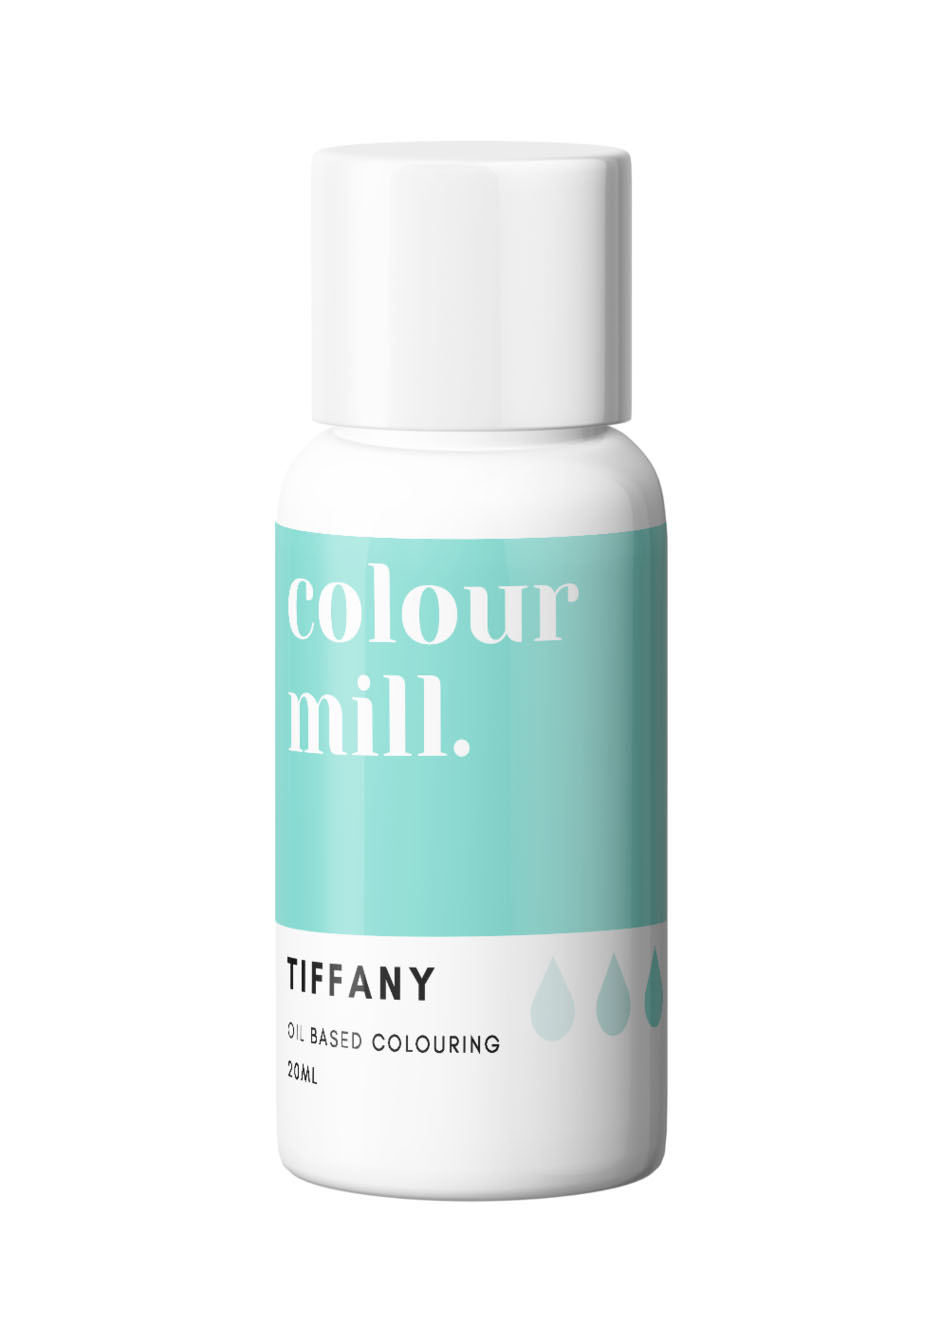 Colour Mill Tiffany Colouring 20ml